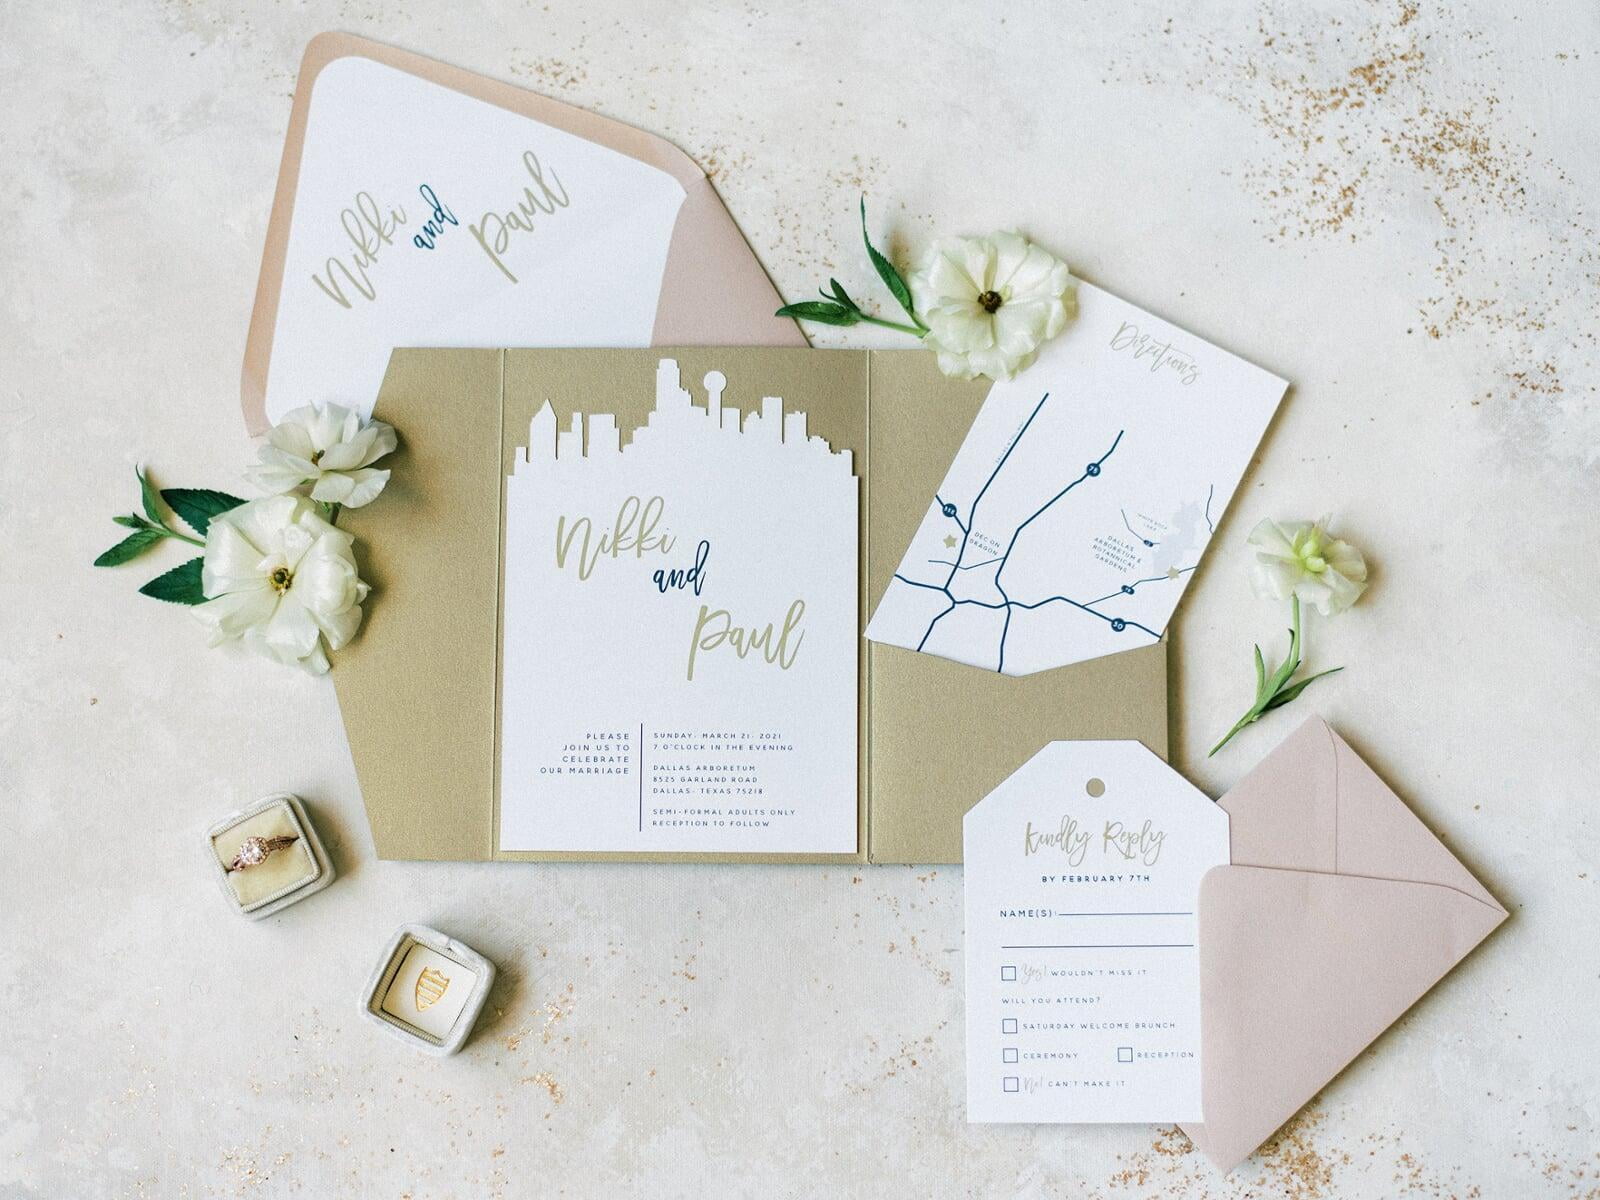 Handmade Wedding Invitations: 21 Designs That Every Couple Will